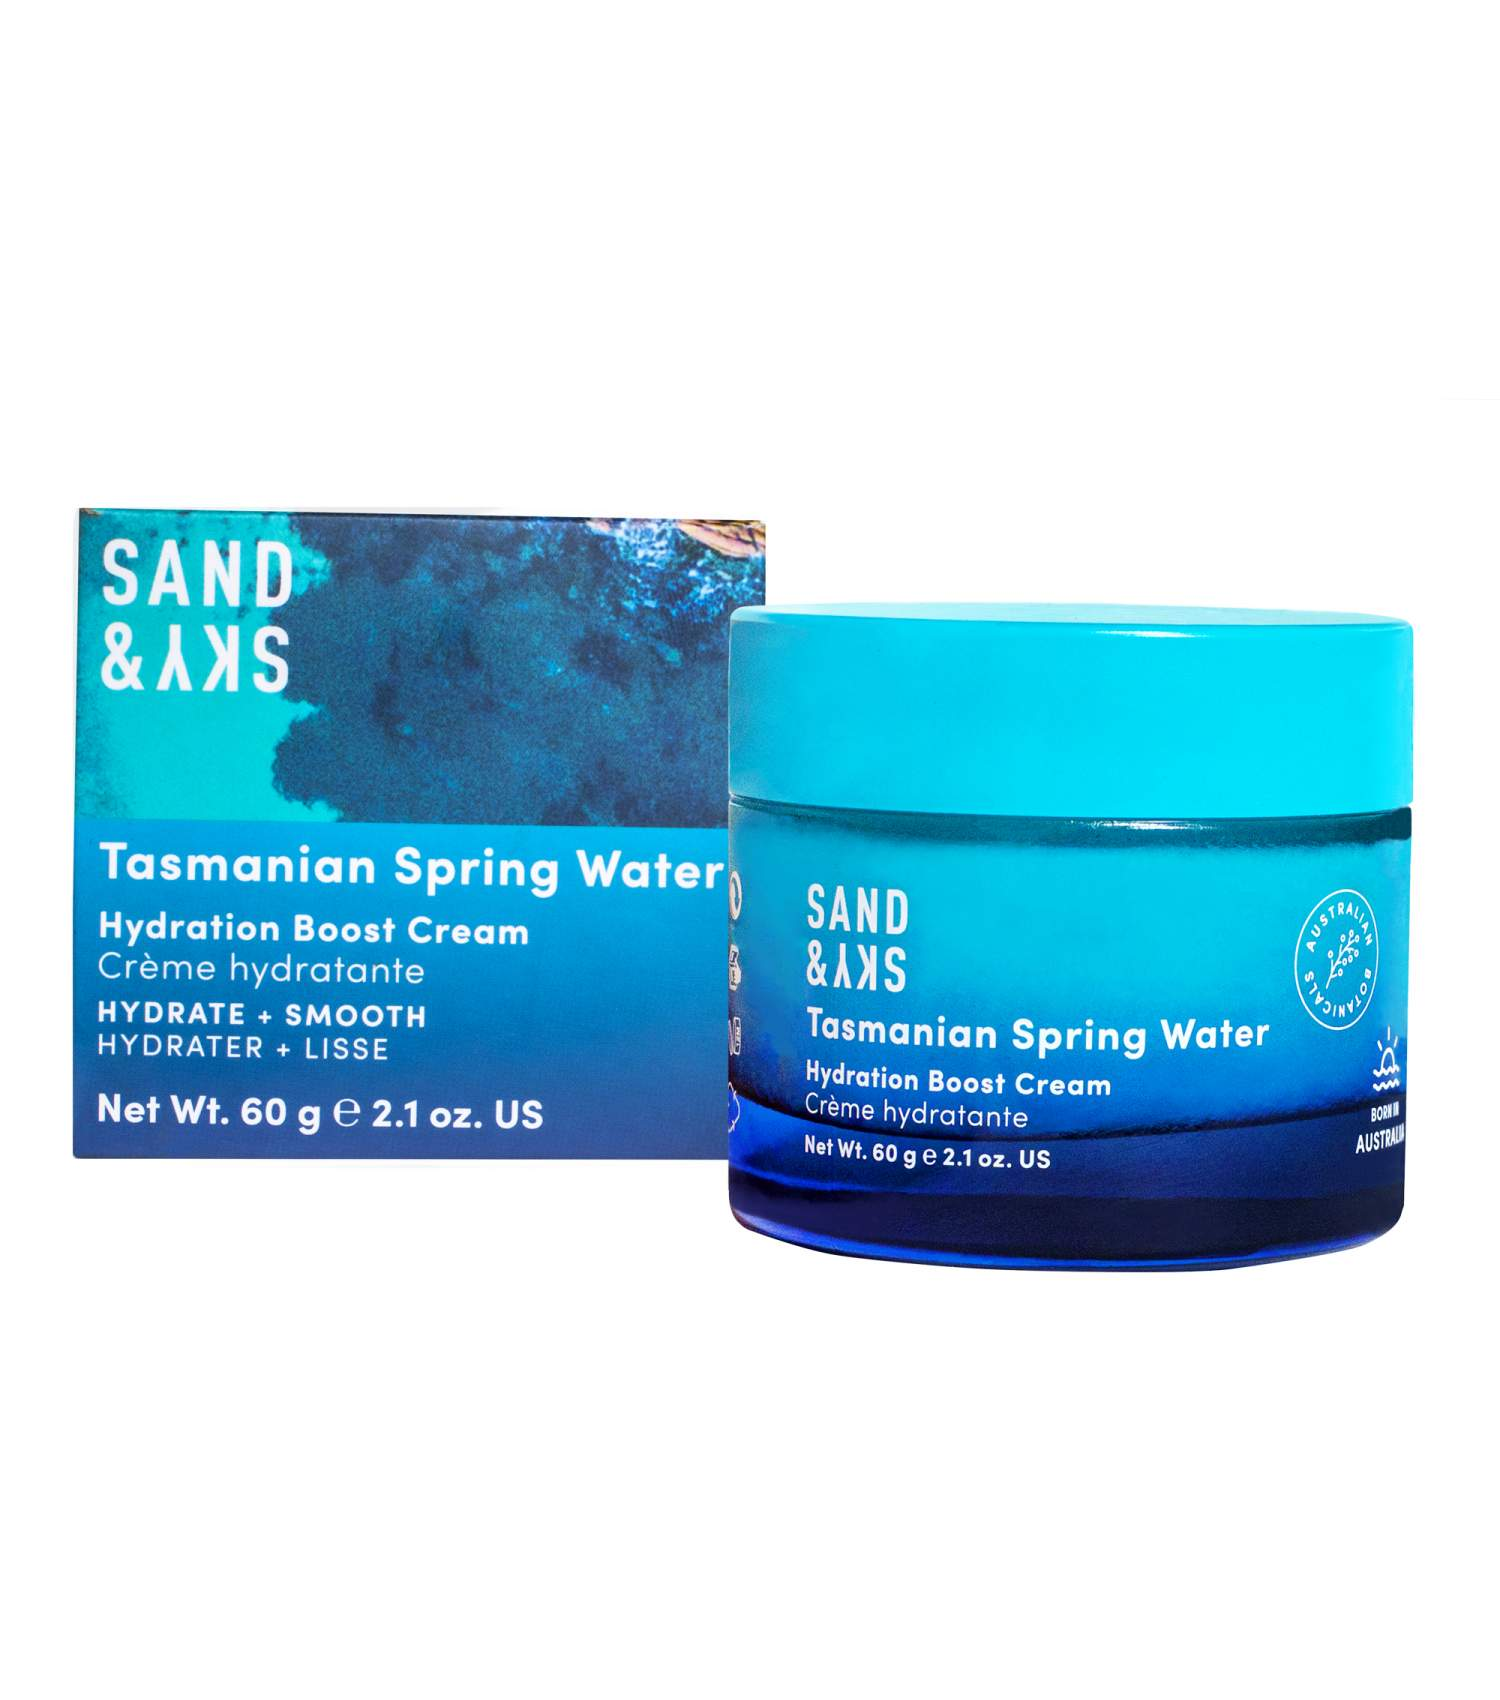 Sand & Sky Tasmanian Spring Water - Hydration Boost Cream Sand & Sky Tasmanian Spring Water - Hydration Boost Cream 1